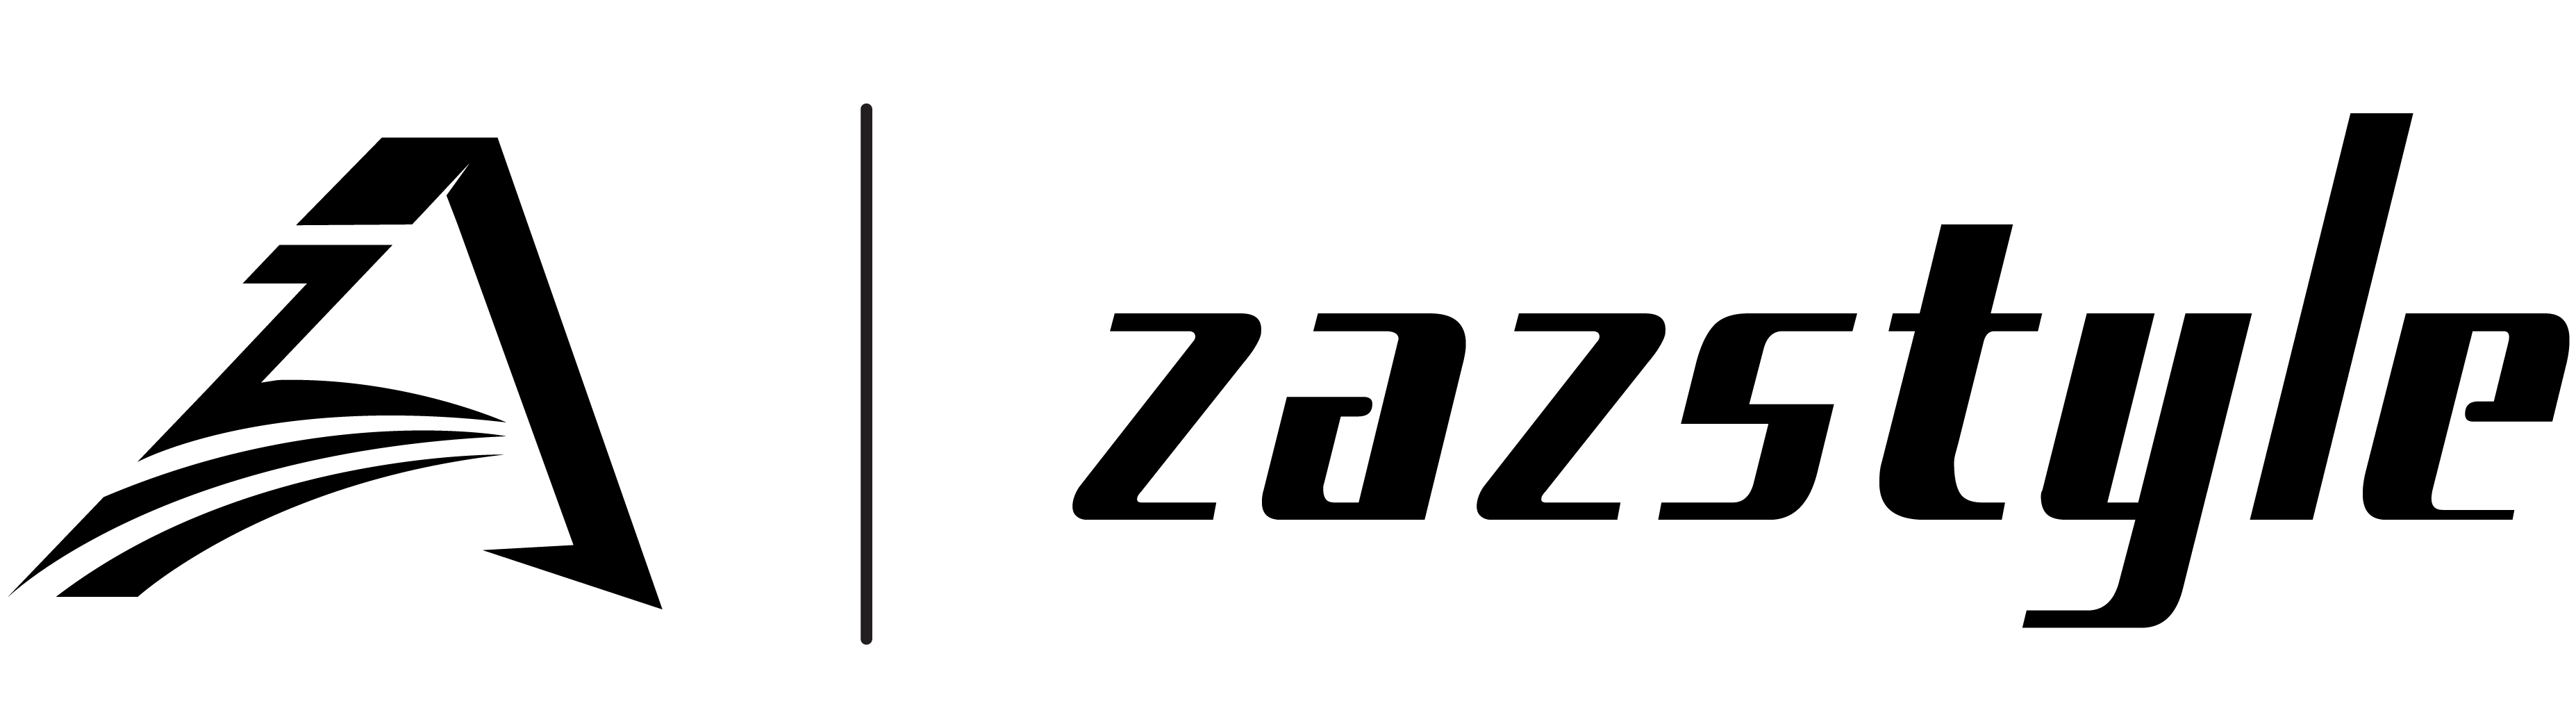 Zazstyle-logo